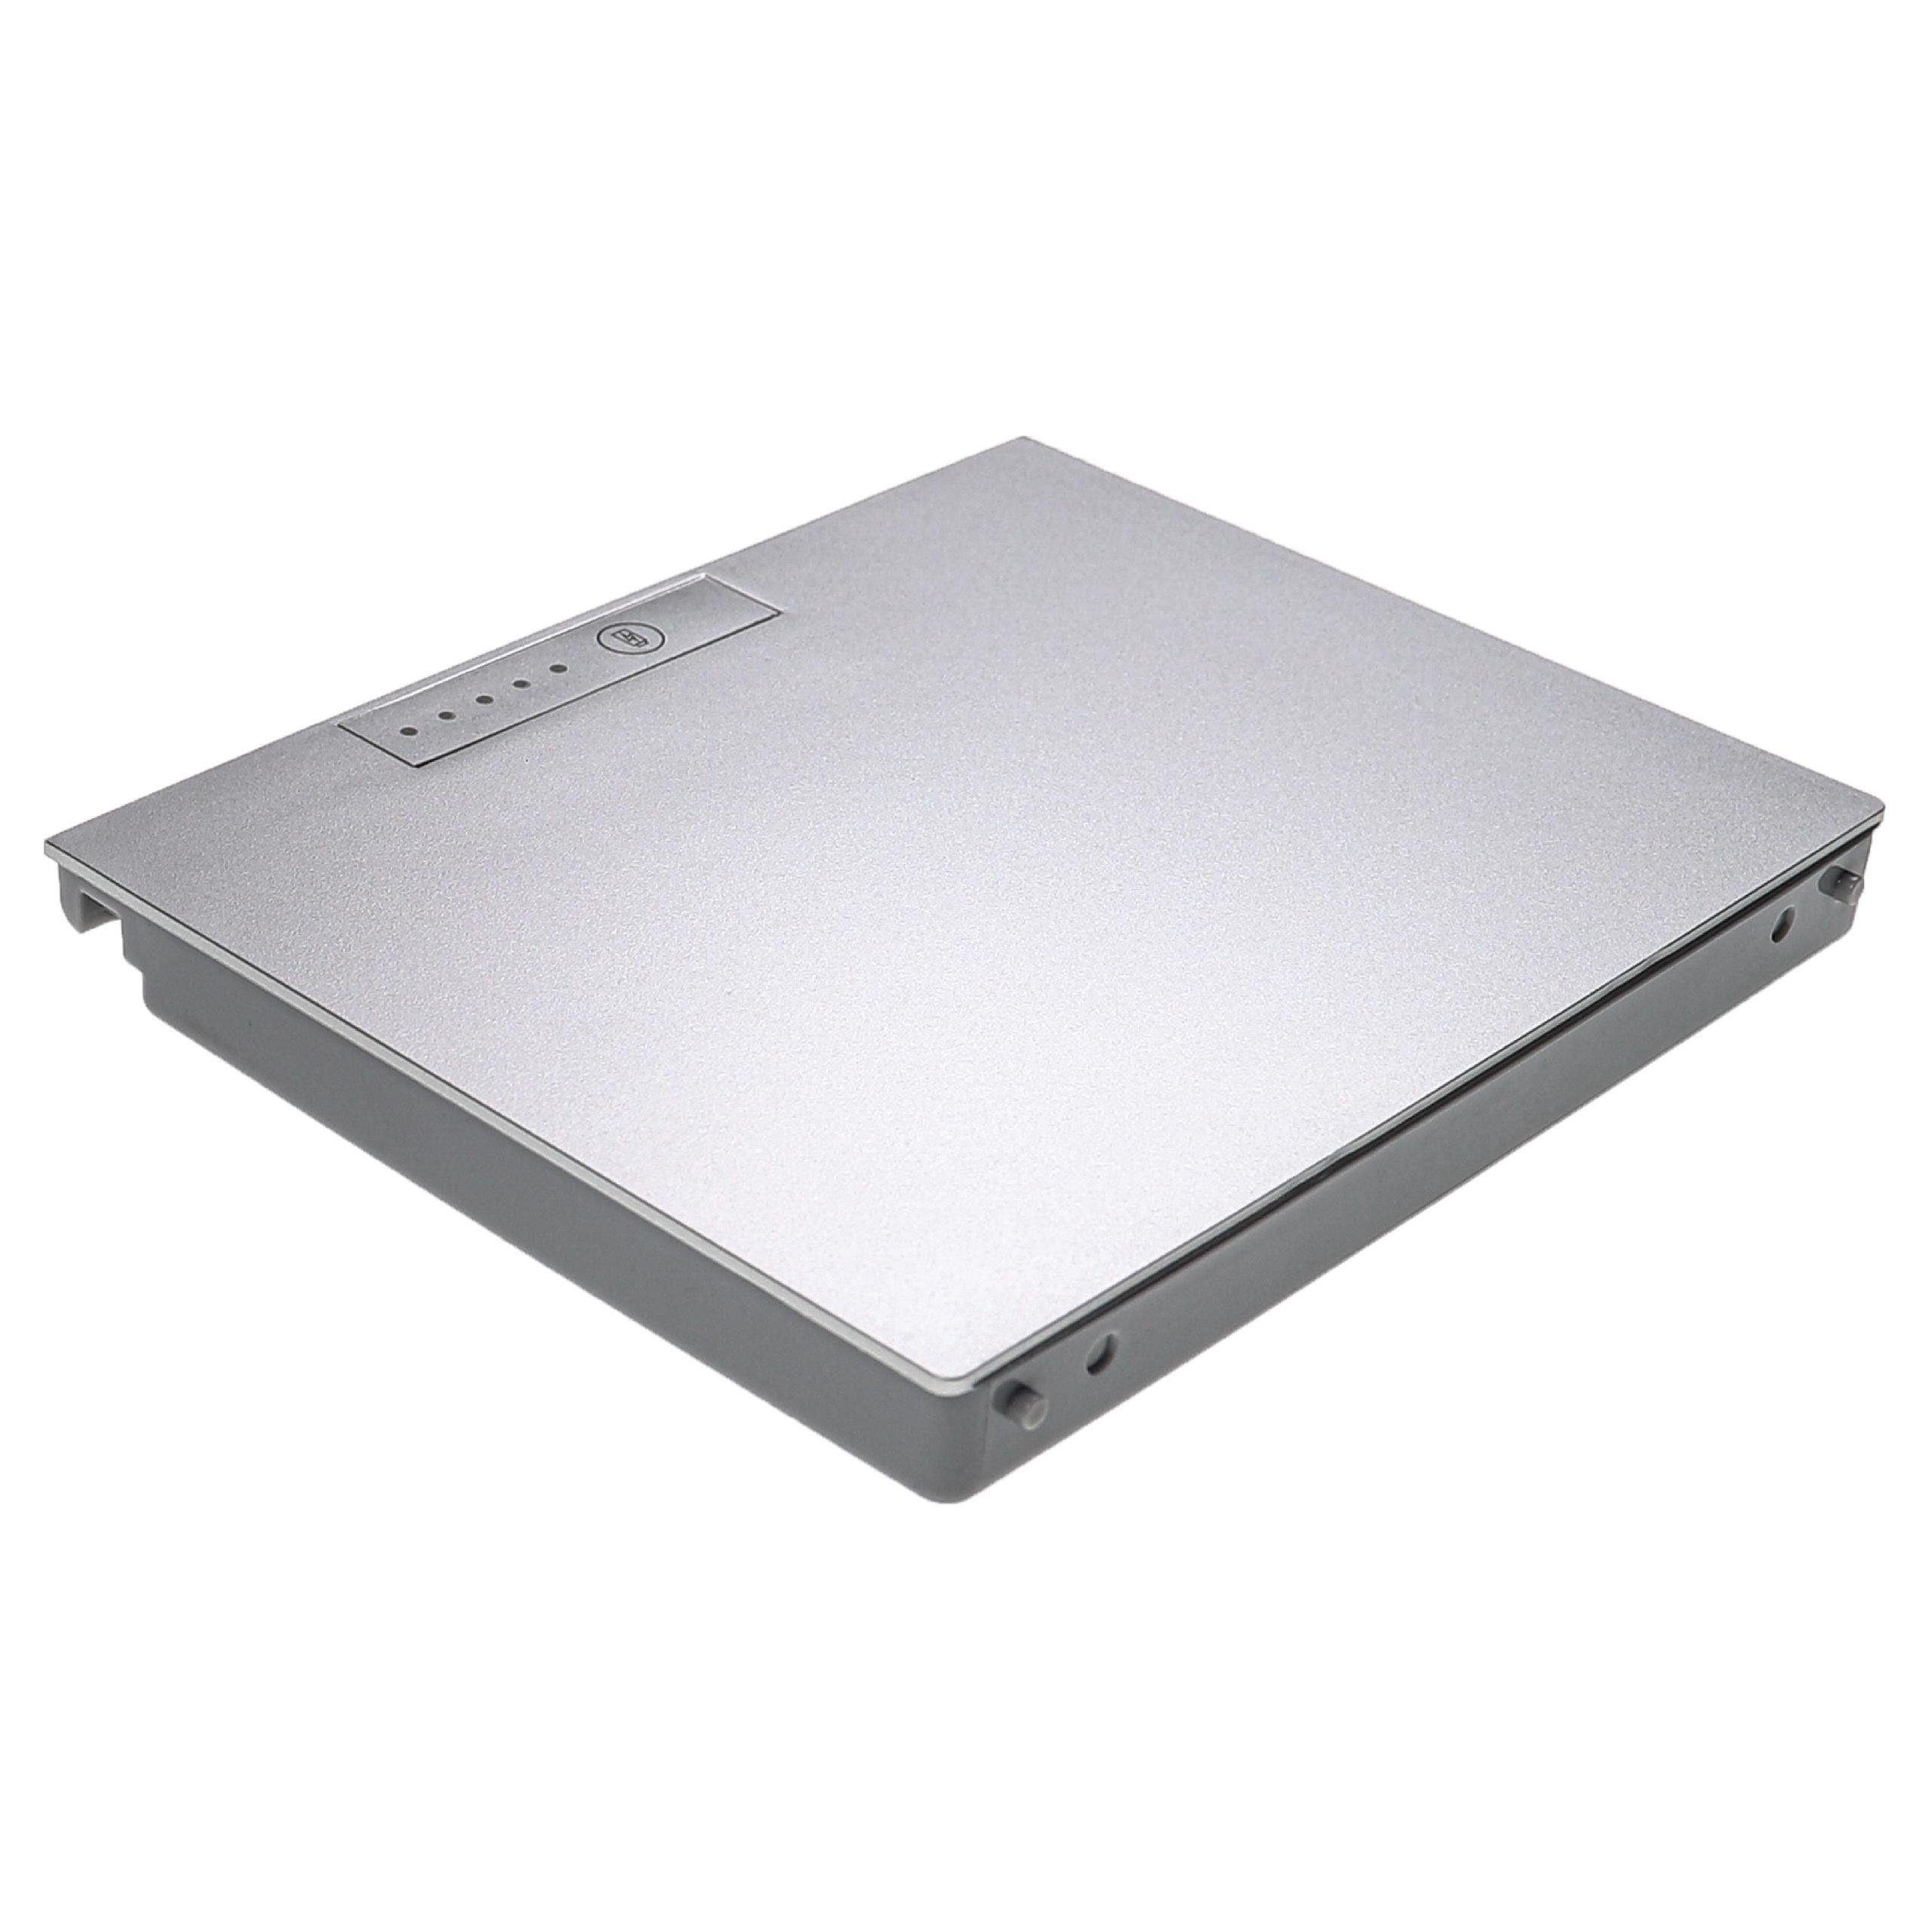 MA609, für Laptop-Akku 15 15 15 mAh Macbook vhbw MA601X/A, passend 15 5200 MA609*/A, Pro Apple